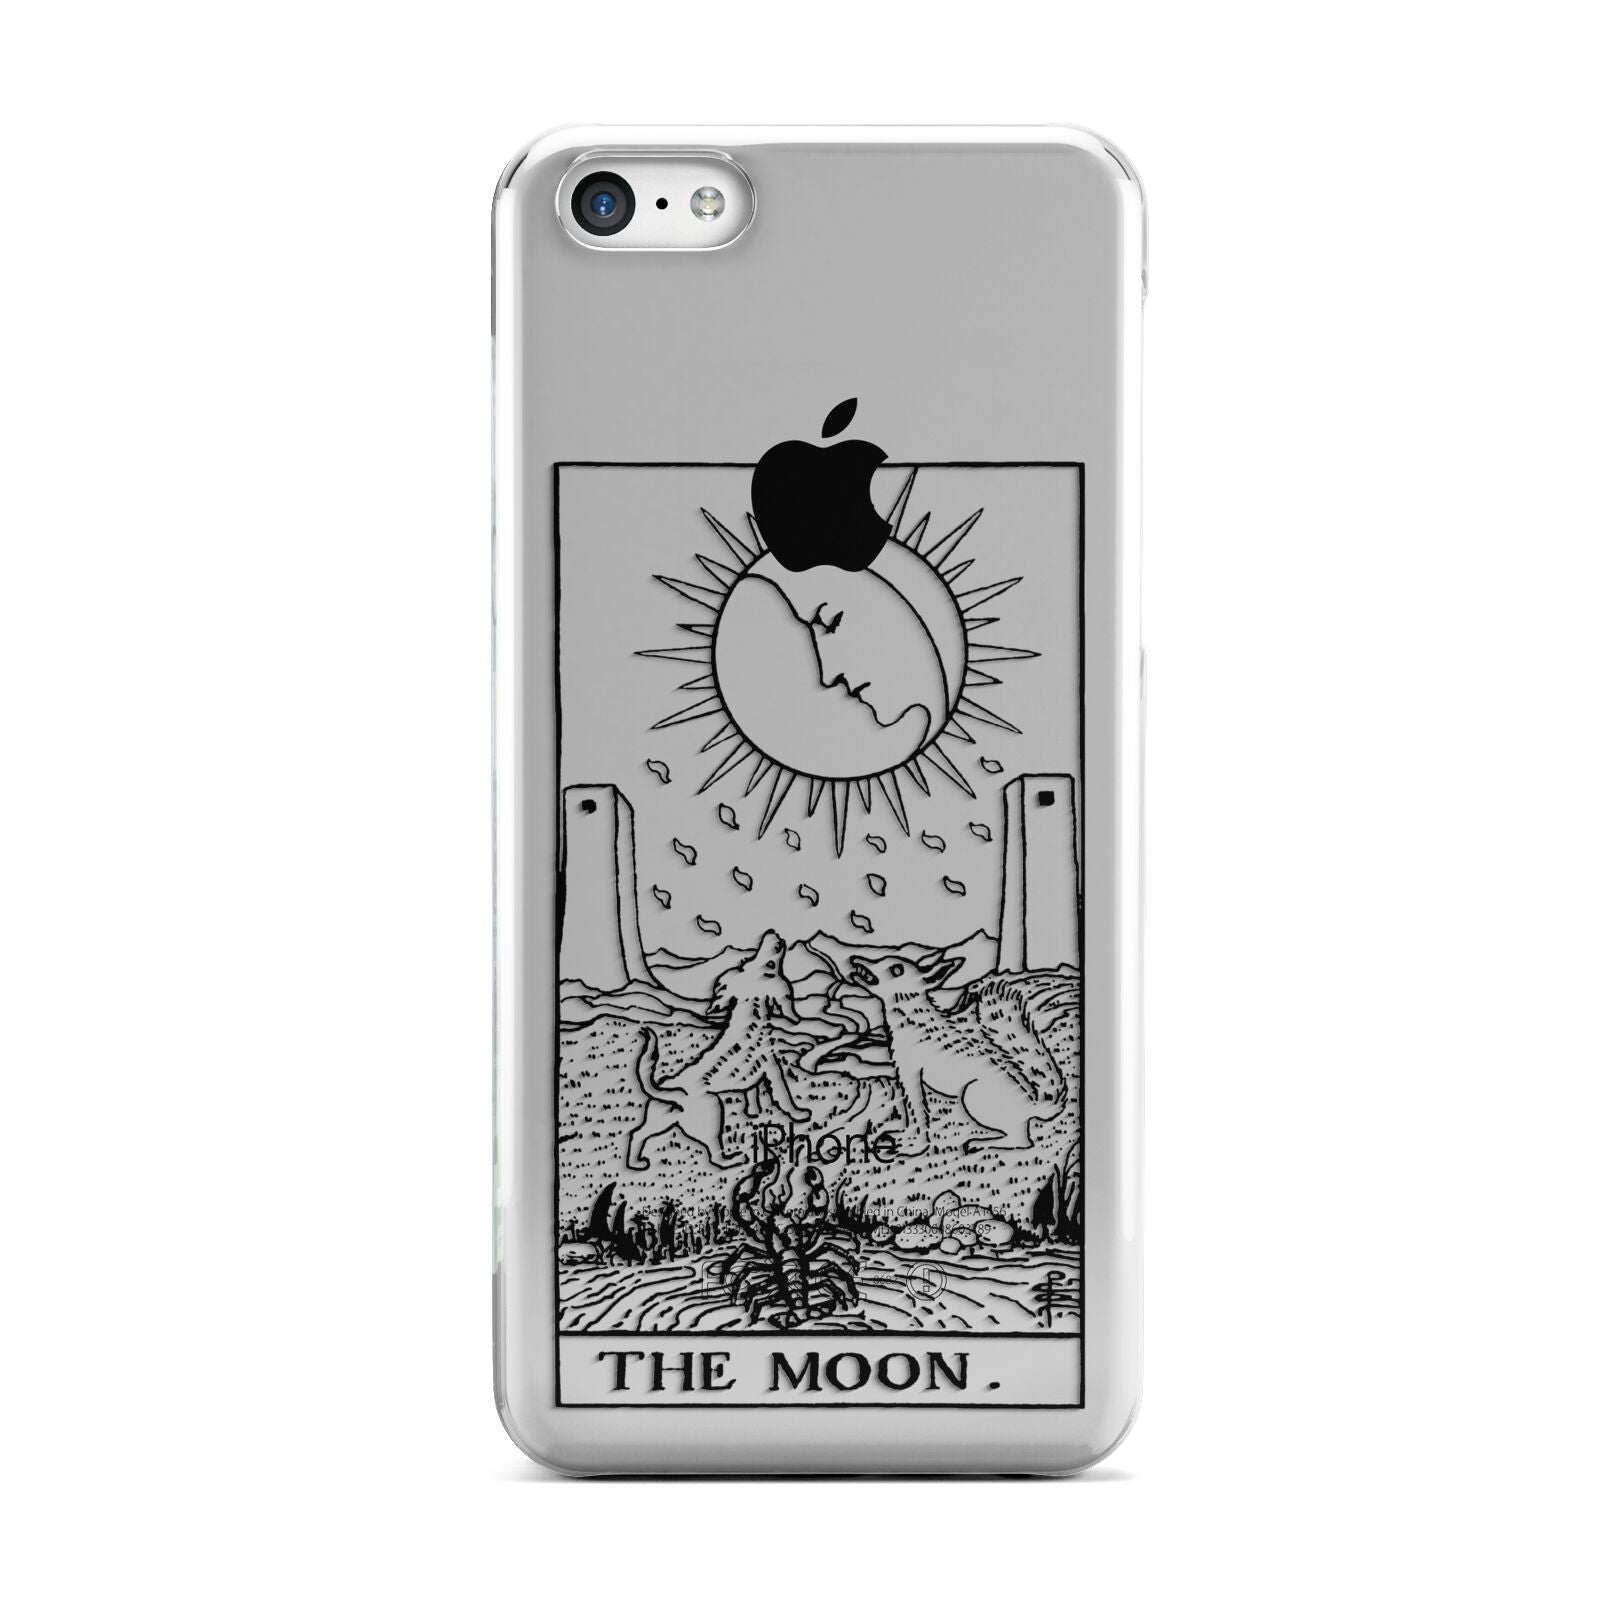 The Moon Monochrome Apple iPhone 5c Case